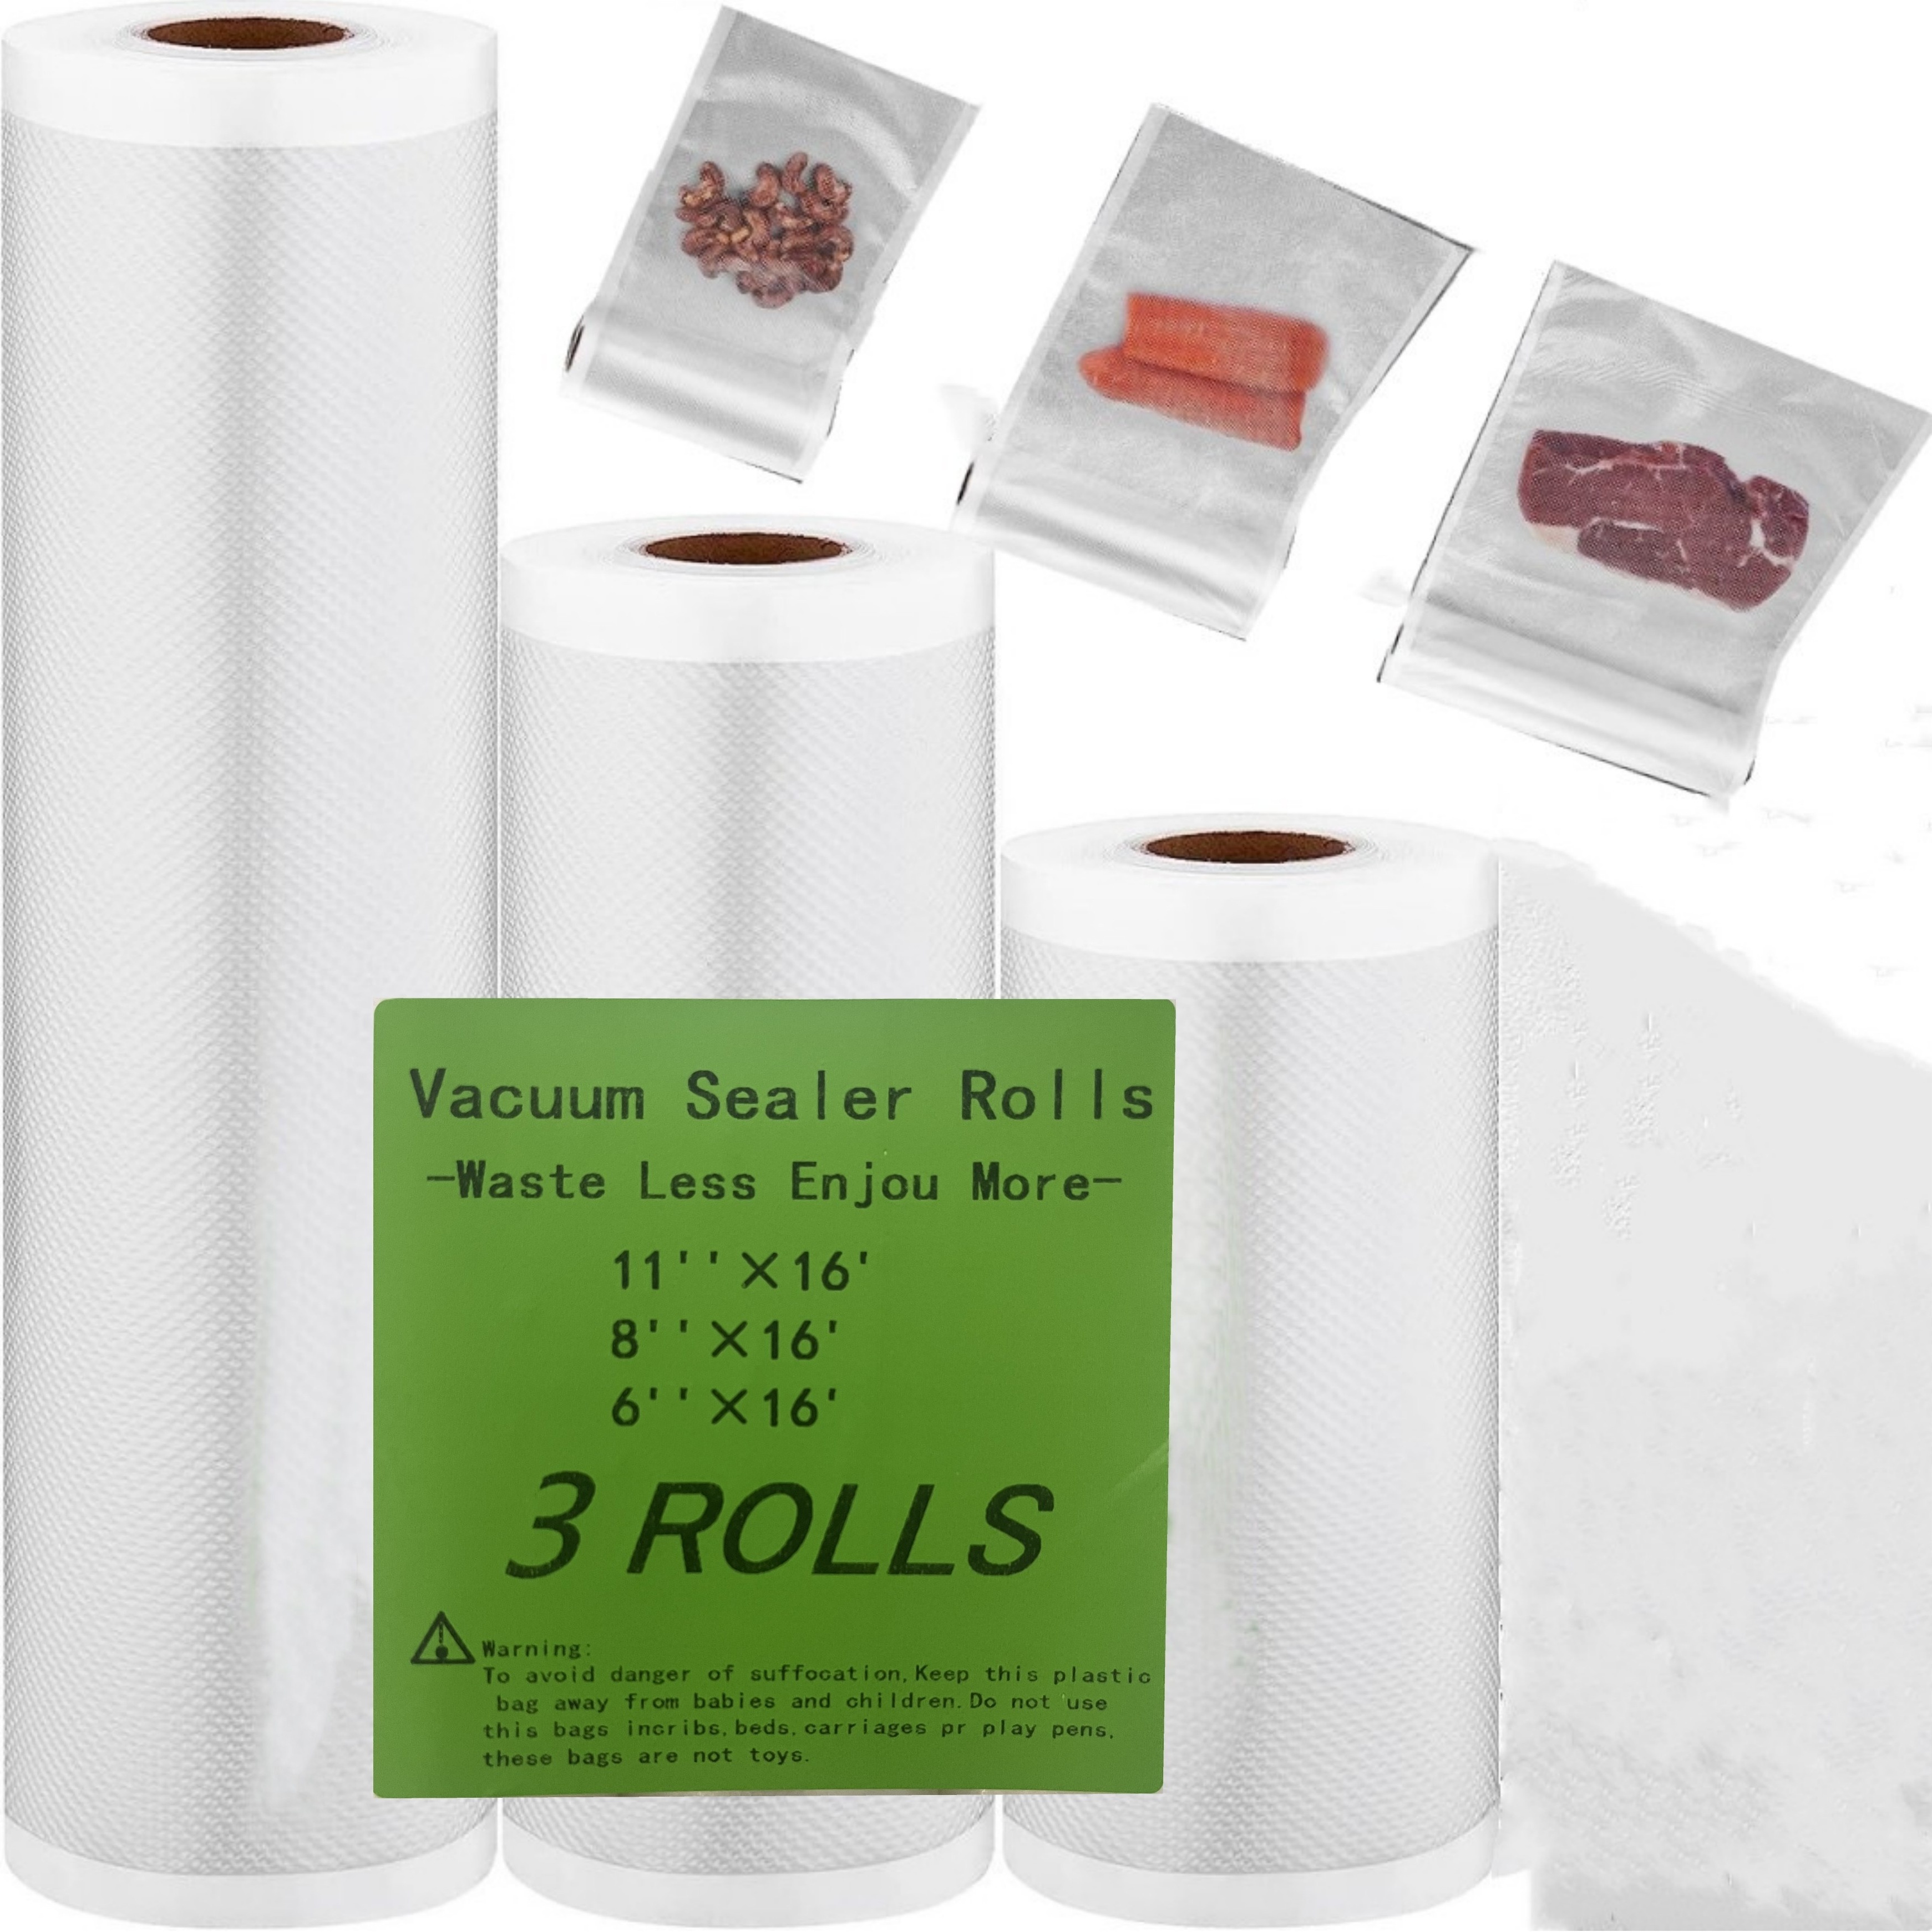 FoodSaver 11 x 16' Vacuum Seal Roll, 3 Pack